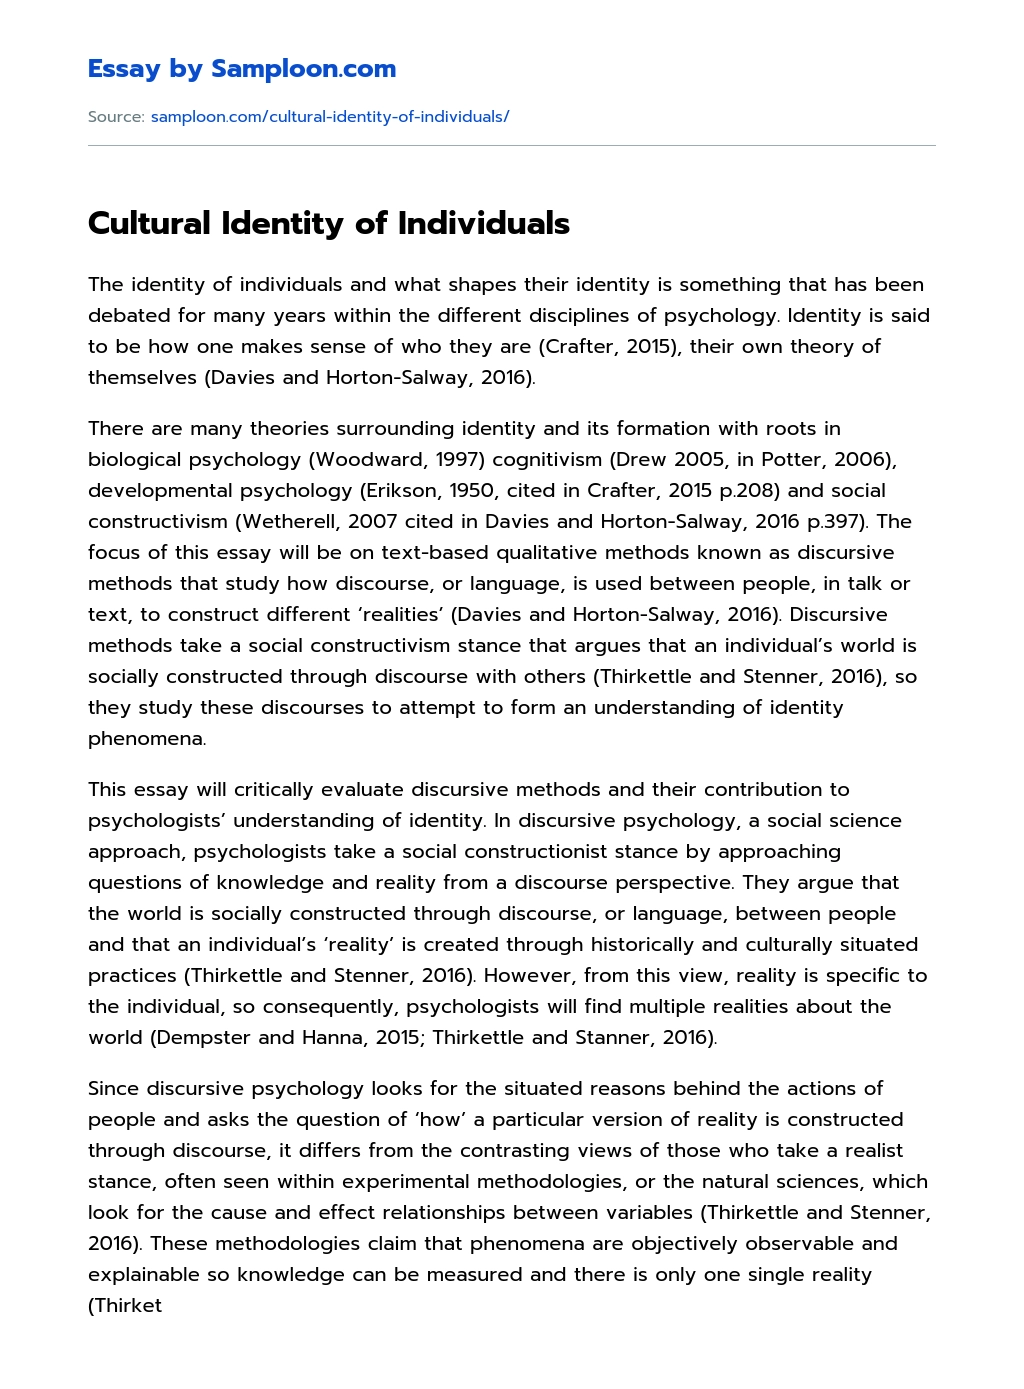 Cultural Identity of Individuals essay